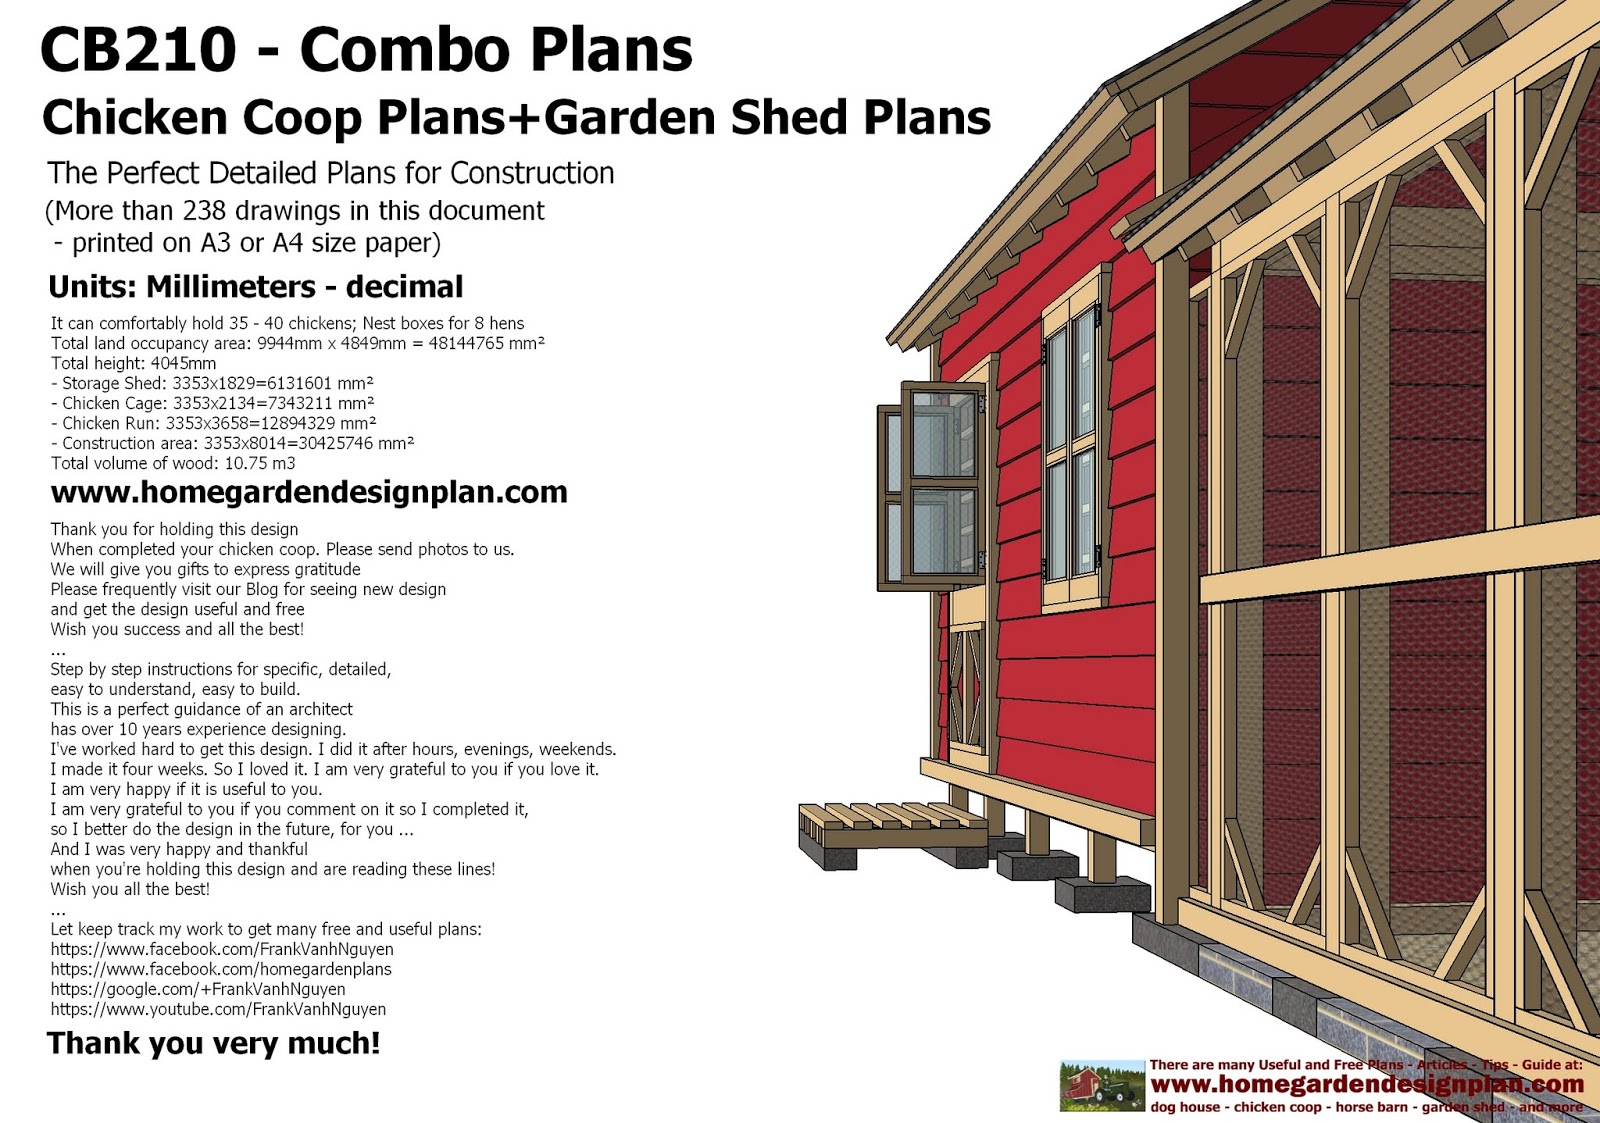 home garden plans:    CB210 - Combo Plans - Chicken Coop 